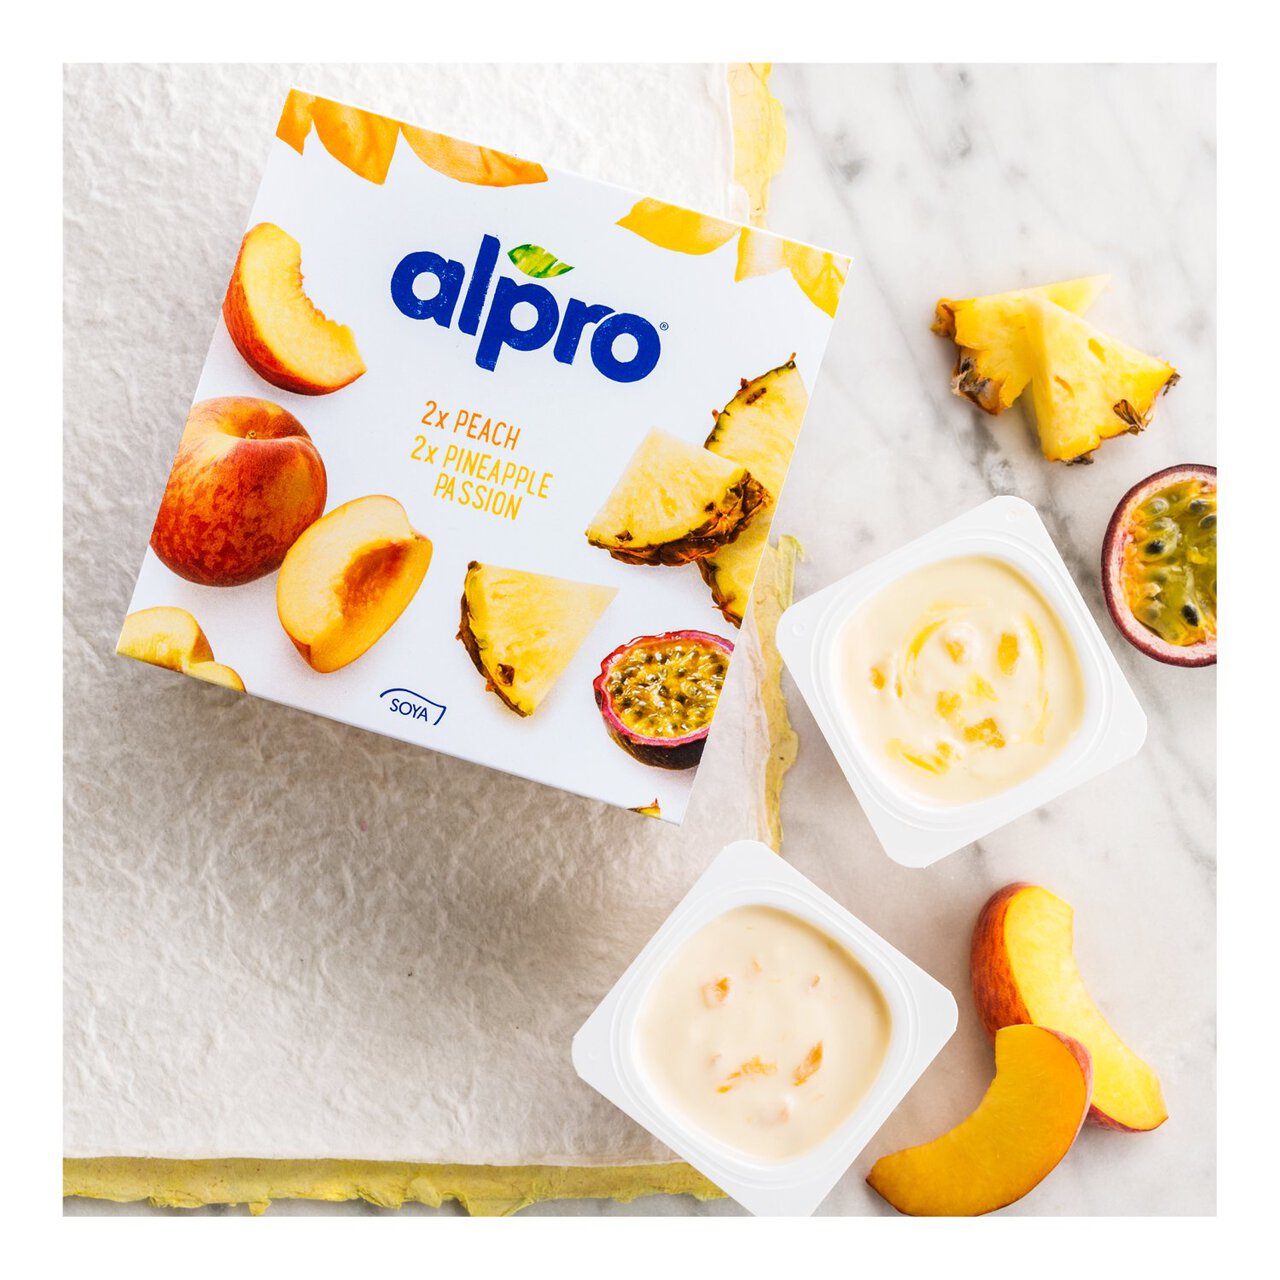 Alpro Peach & Pineapple-Passion fruit Yoghurt Alternative 4 x 125g